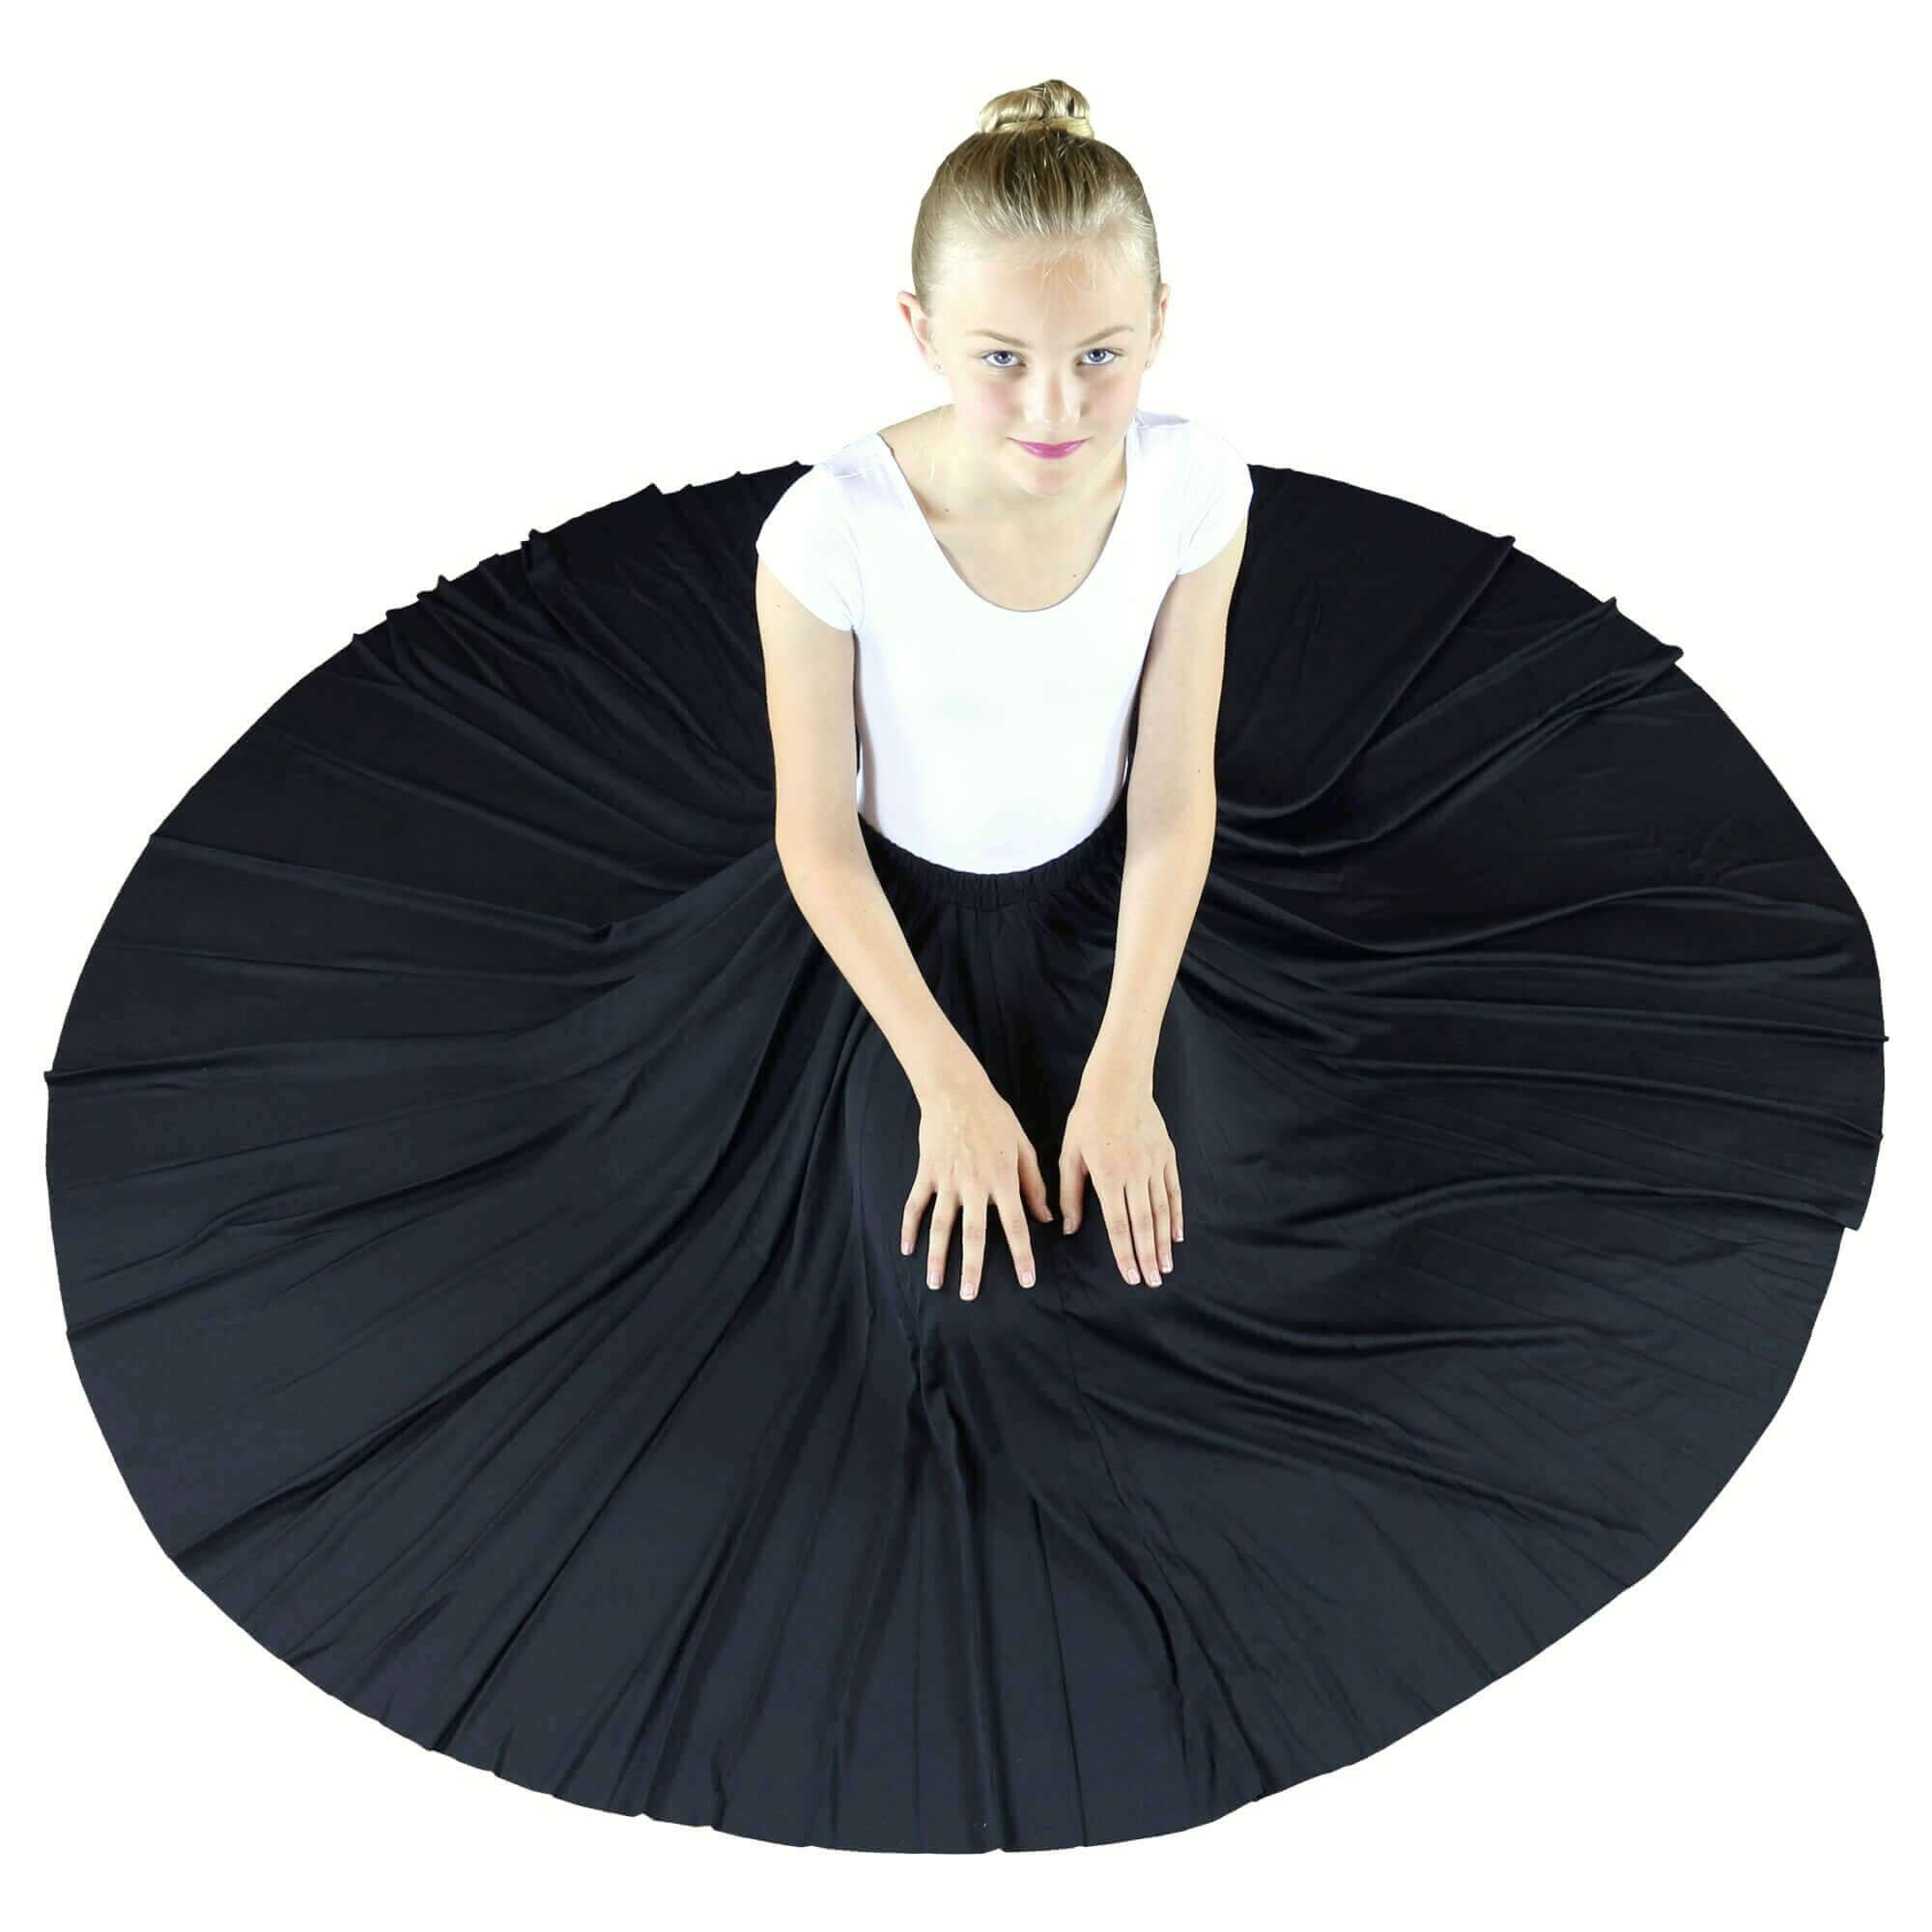 Danzcue Child Long Circle Skirt - Click Image to Close